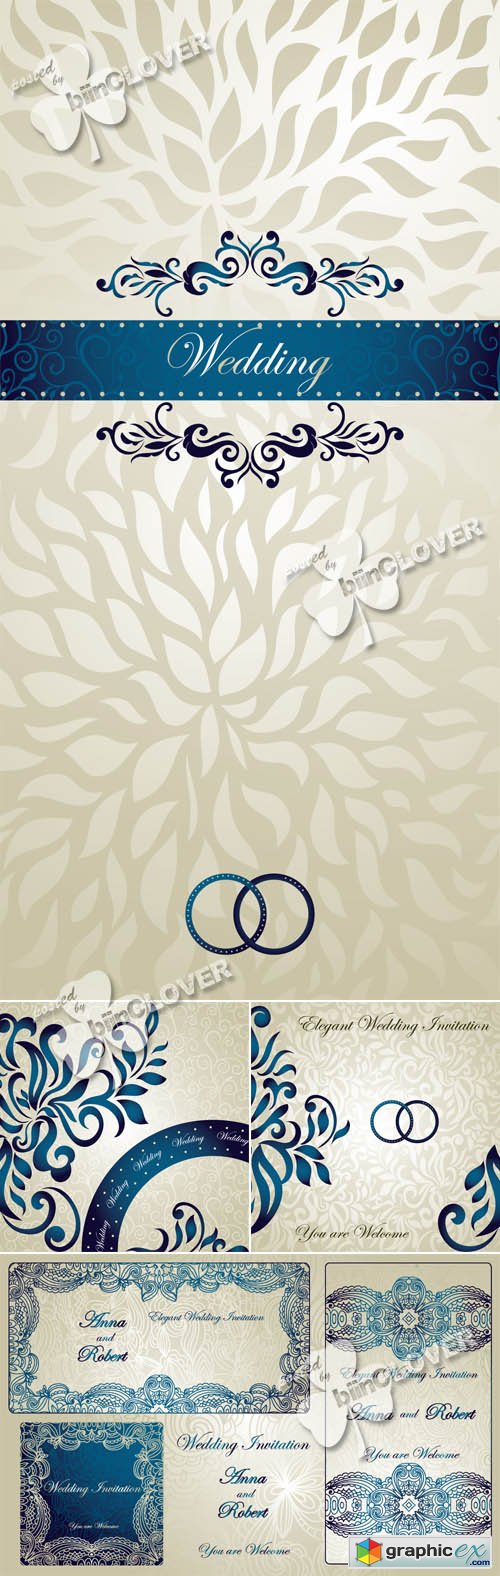 Vector Wedding invitation with floral design 0423